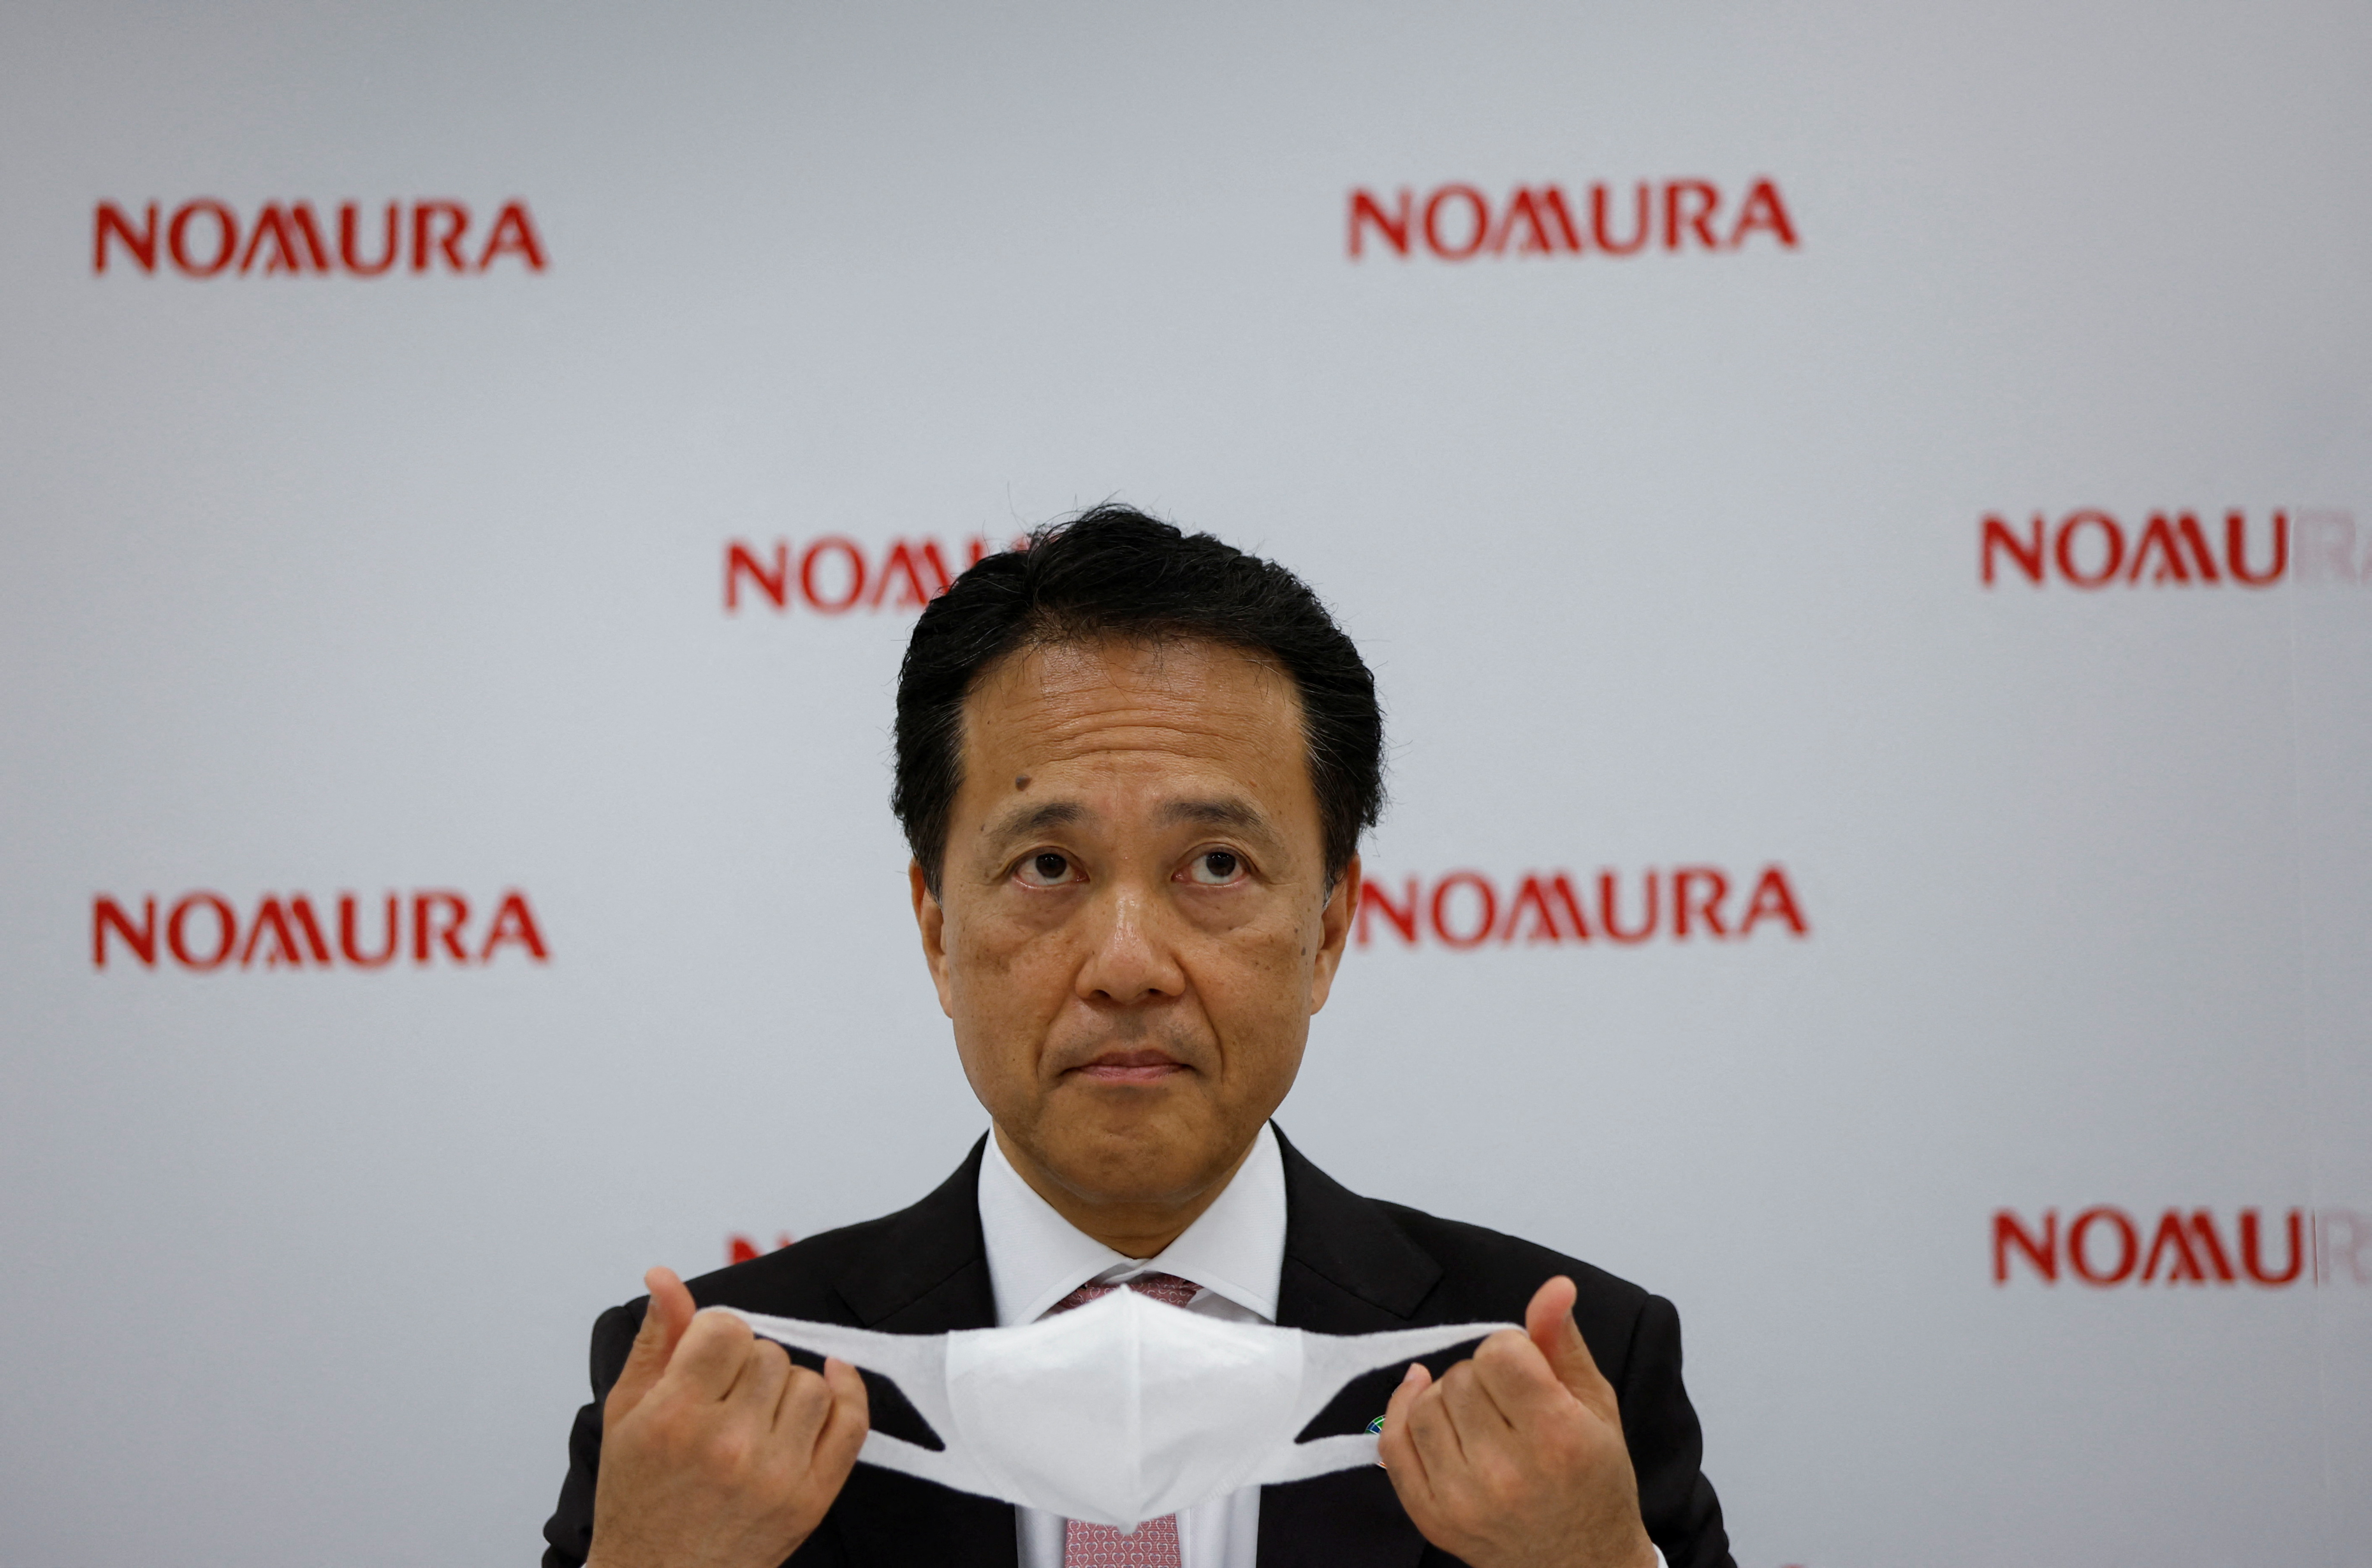 Nomura Holdings Inc. Chief Executive Kentaro Okuda attends a news conference in Tokyo